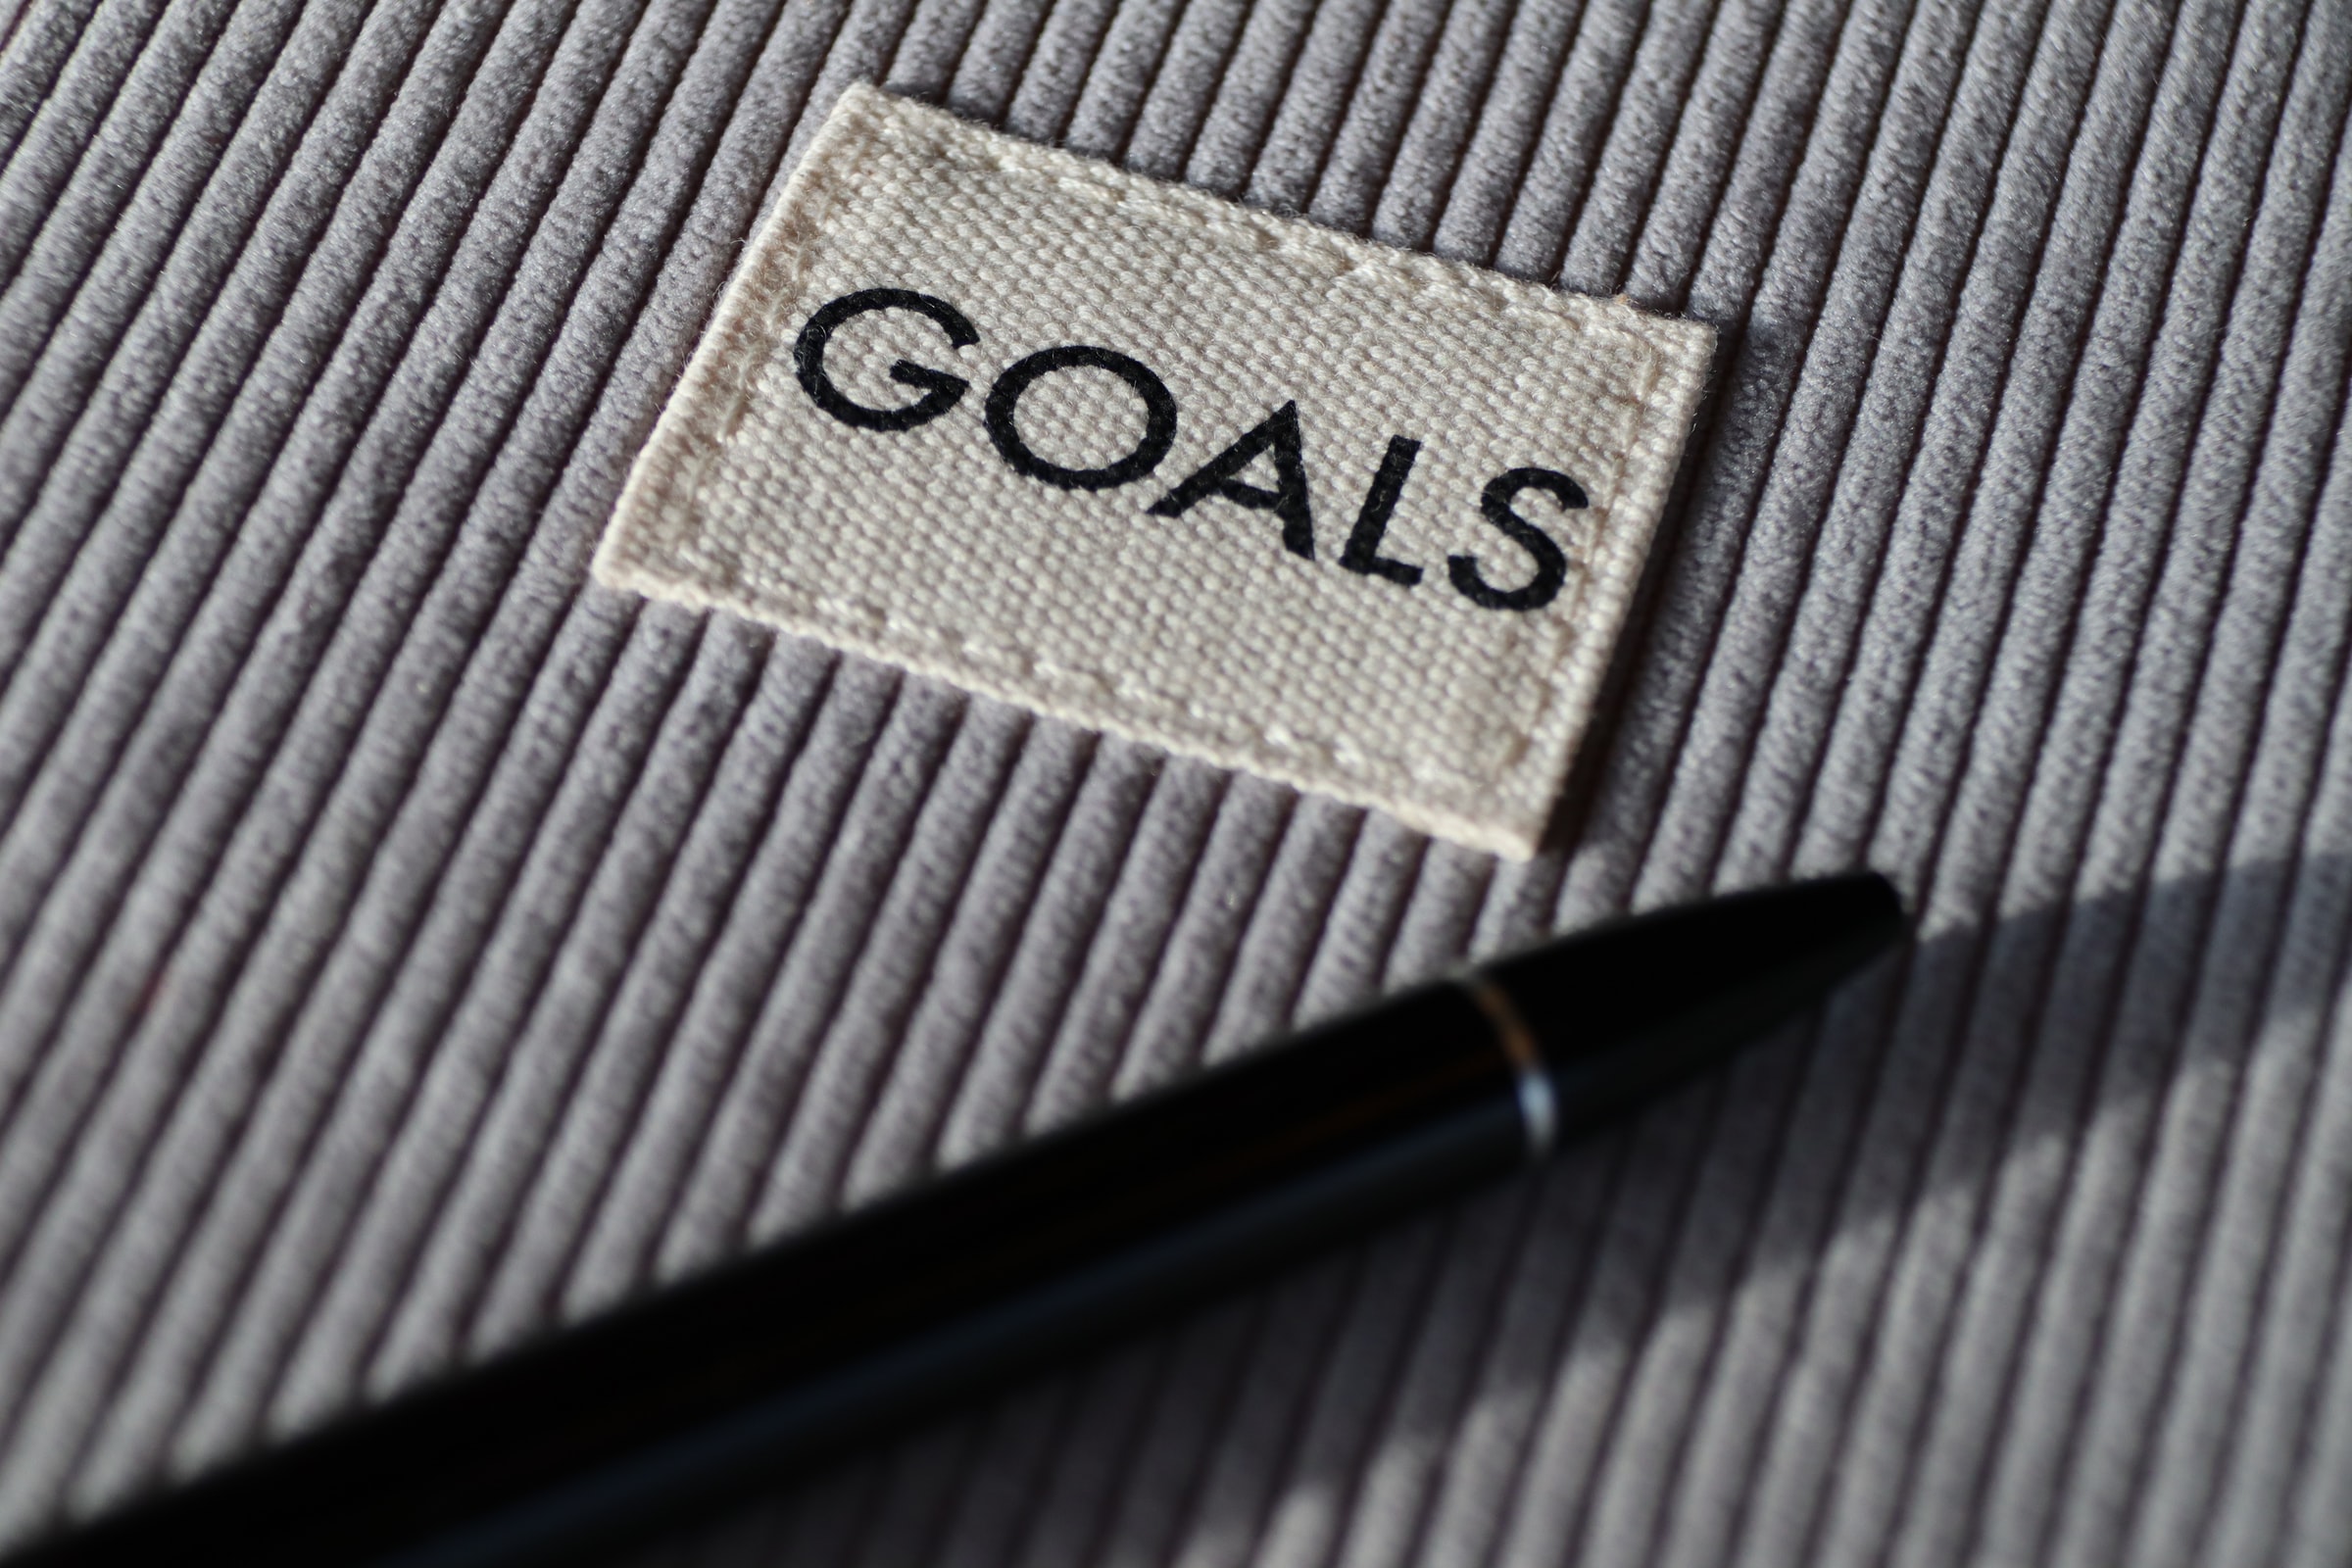 Goal Setting Strategies Lead to Success